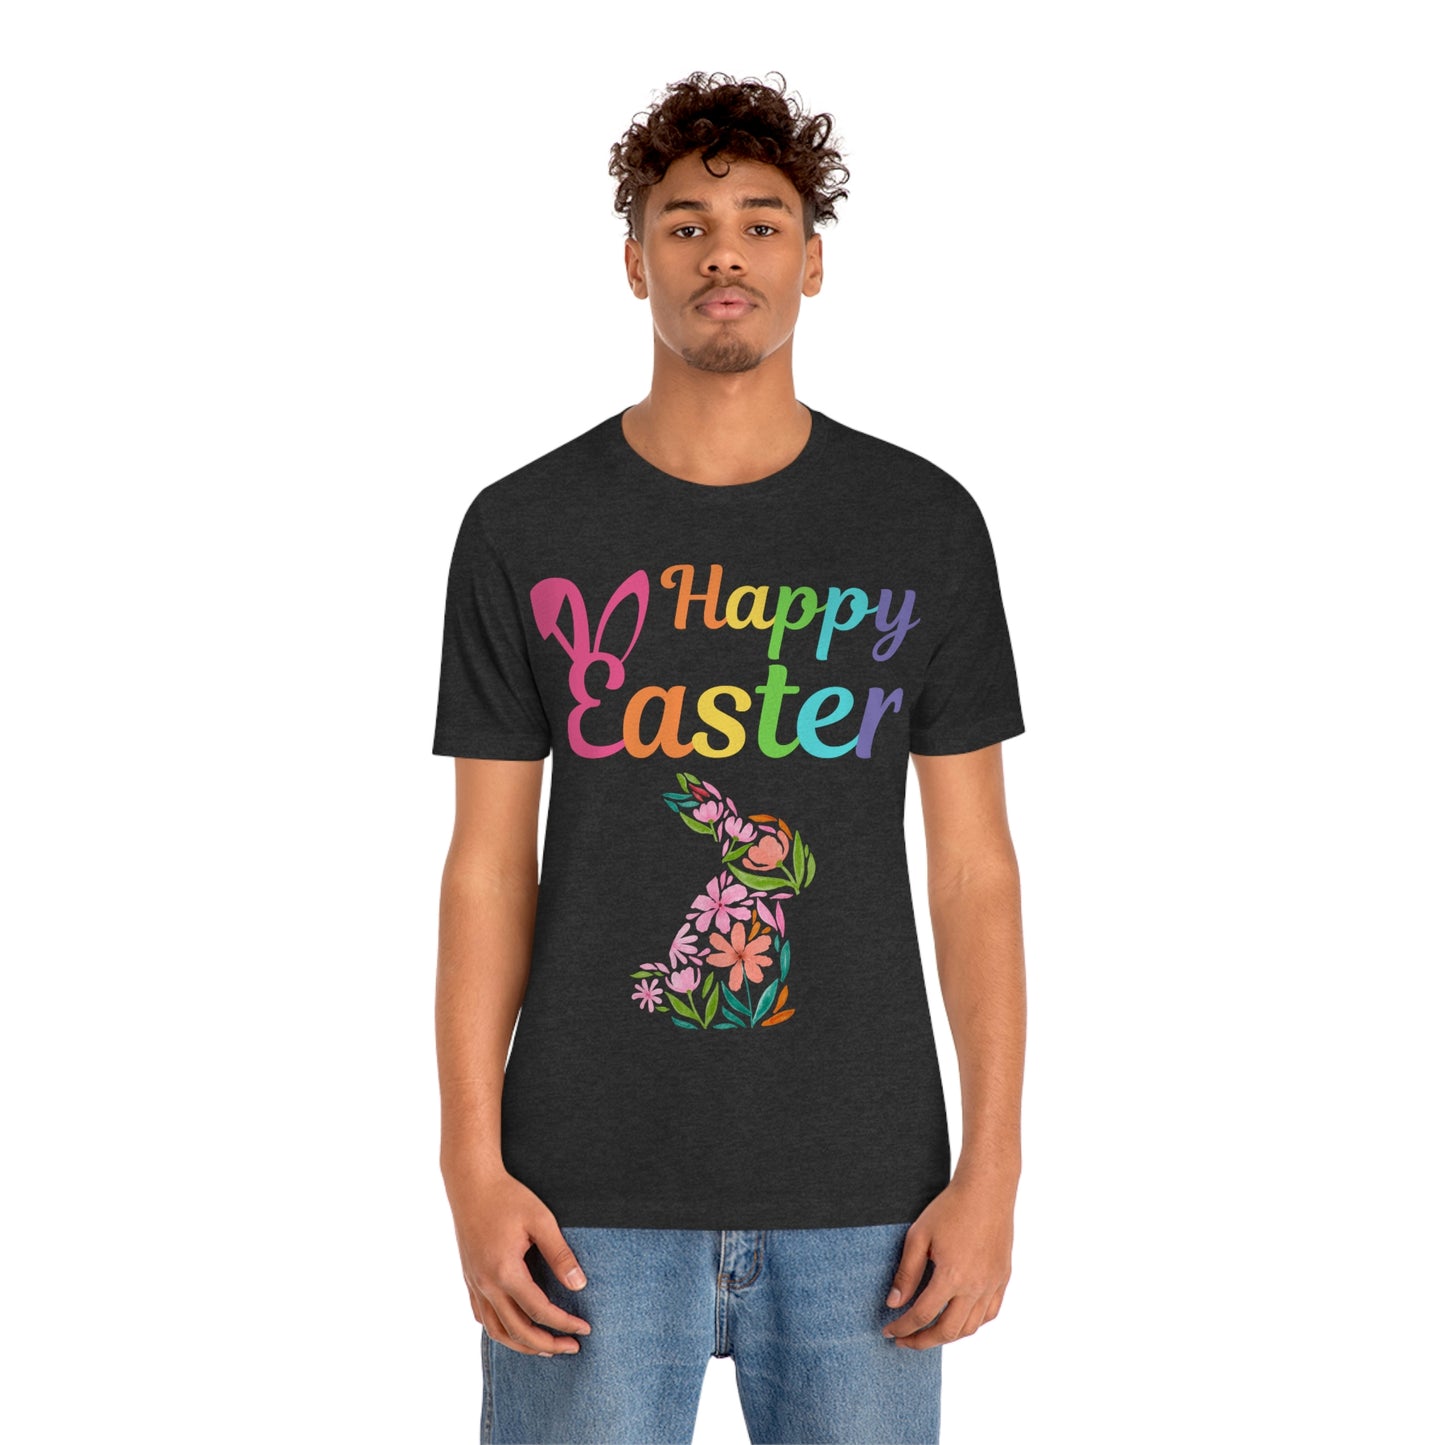 Happy Easter Bunny Shirt Easter Gift women Easter Shirt - Easter Day Shirt Cute Easter flower shirt